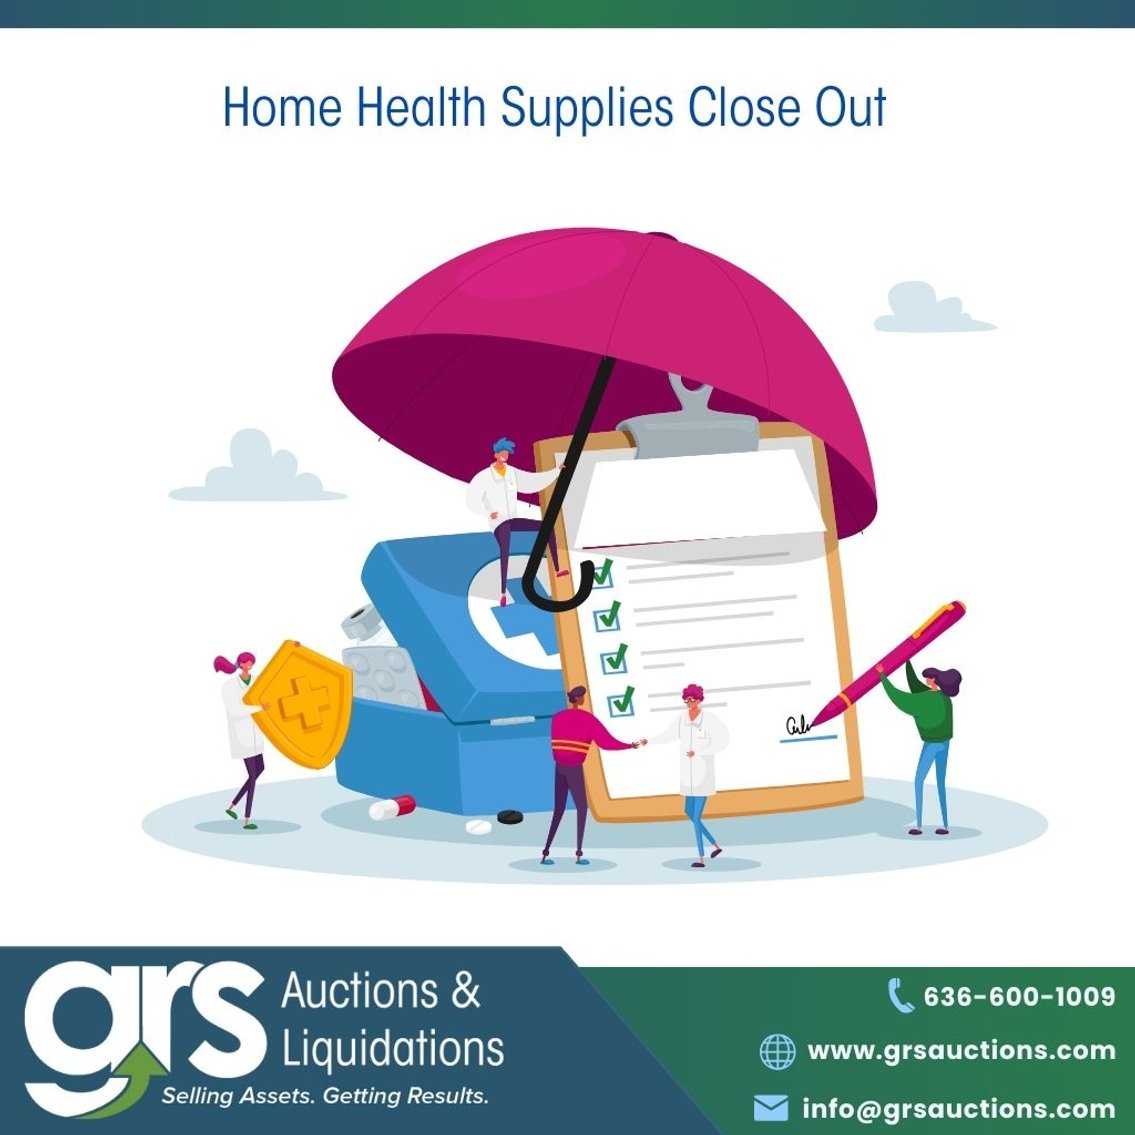 Home Health Supplies - Close Out